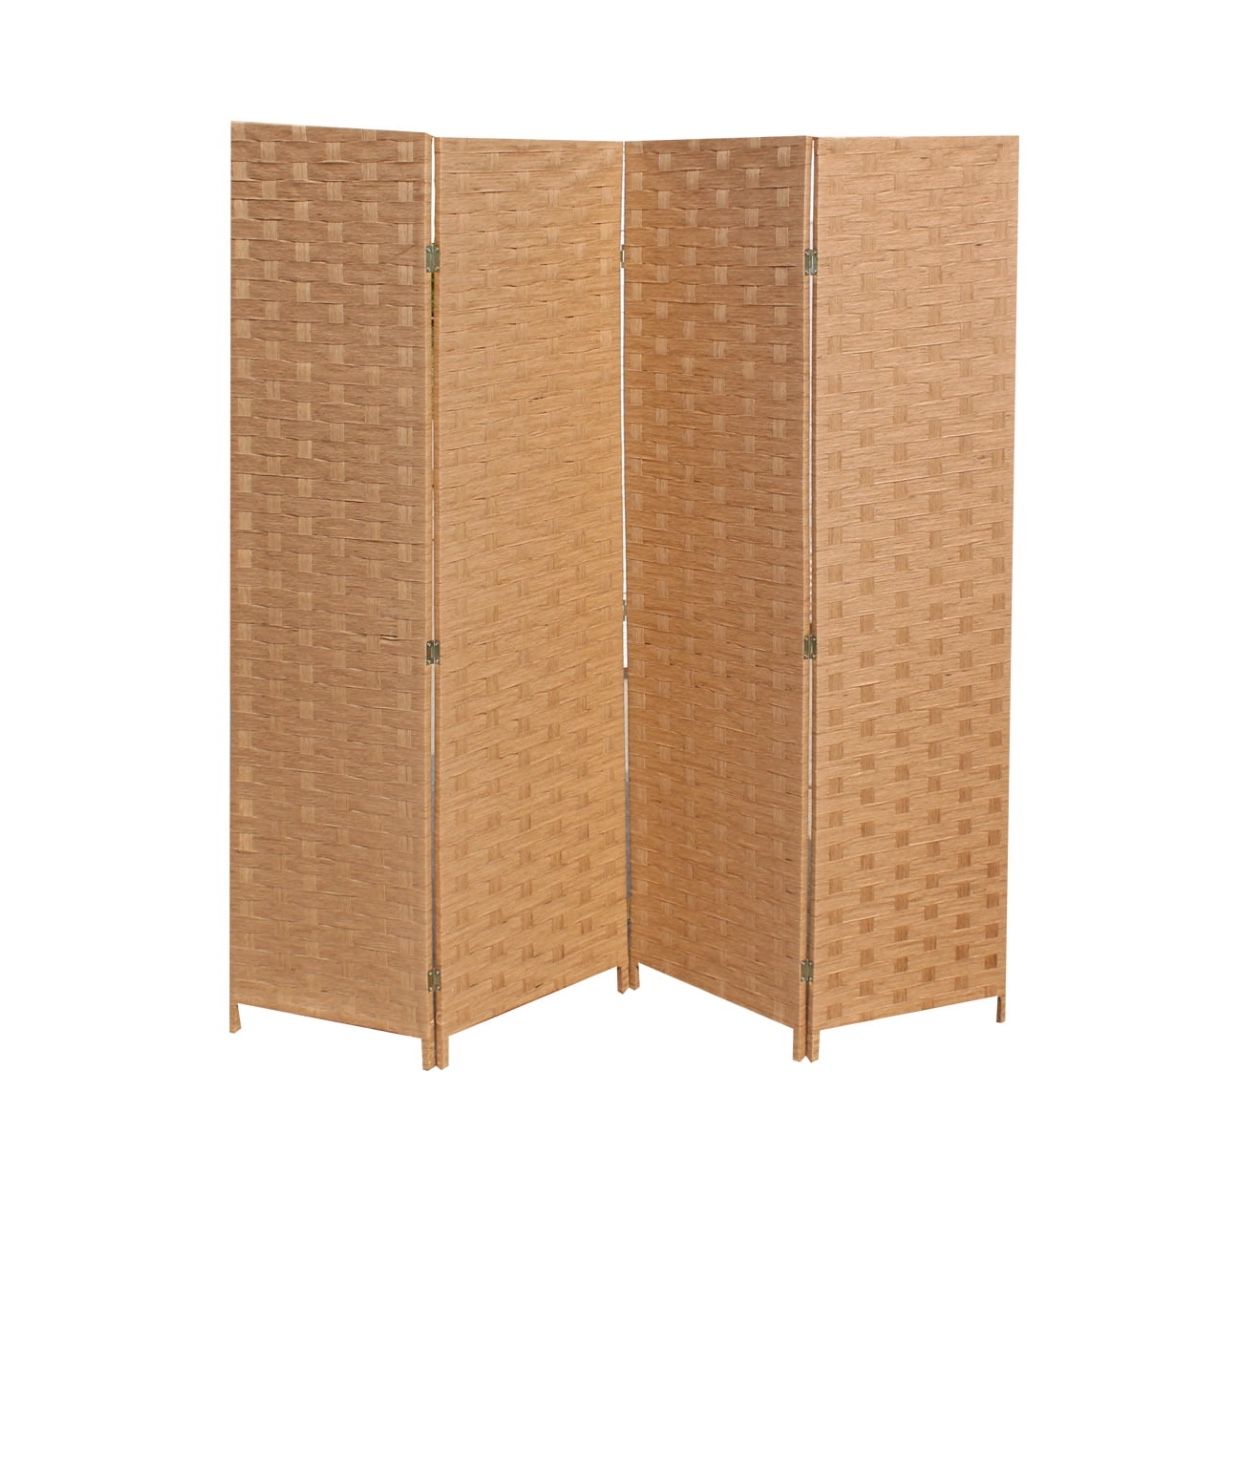 FDW Wood Mesh Woven Design 4 Panel Folding Wooden Screen Room Divider, Beige